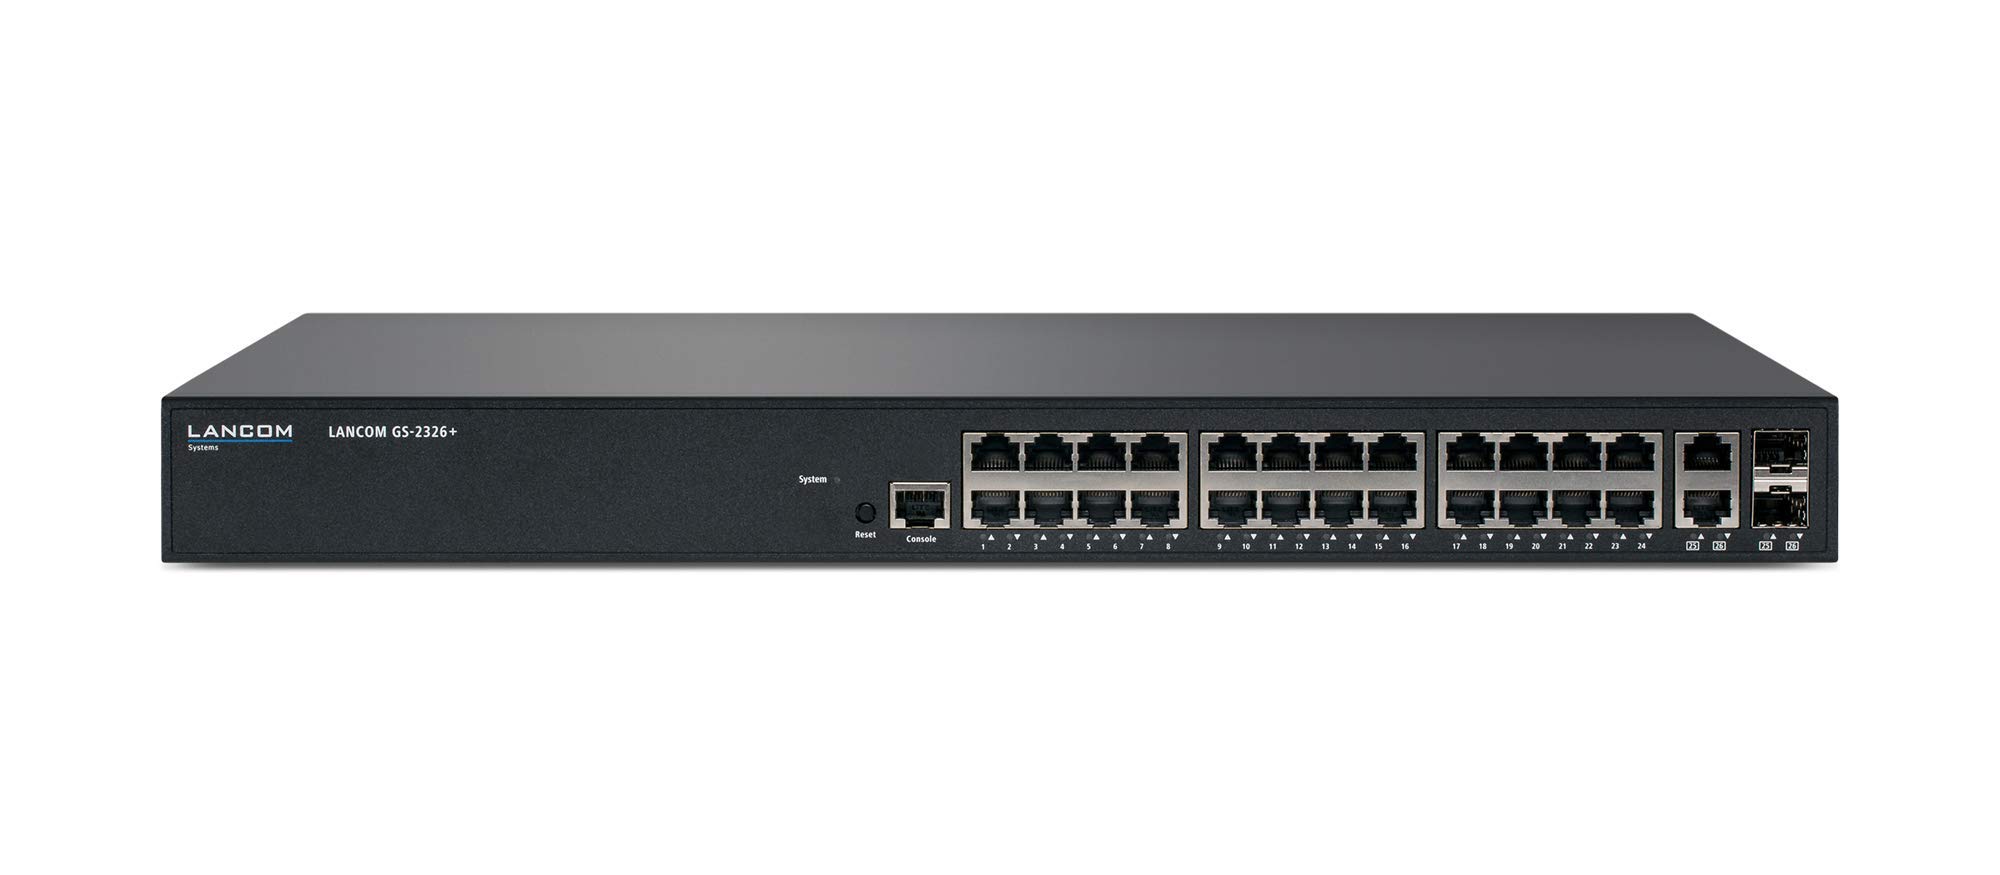 LANCOM GS-2326+, Managed Layer-2-Switch mit 26 Ports, 24 Gigabit Ethernet Ports, 2 Combo-Ports Ethernet/SFP (10/100/1G), 52 GBit/s Durchsatz